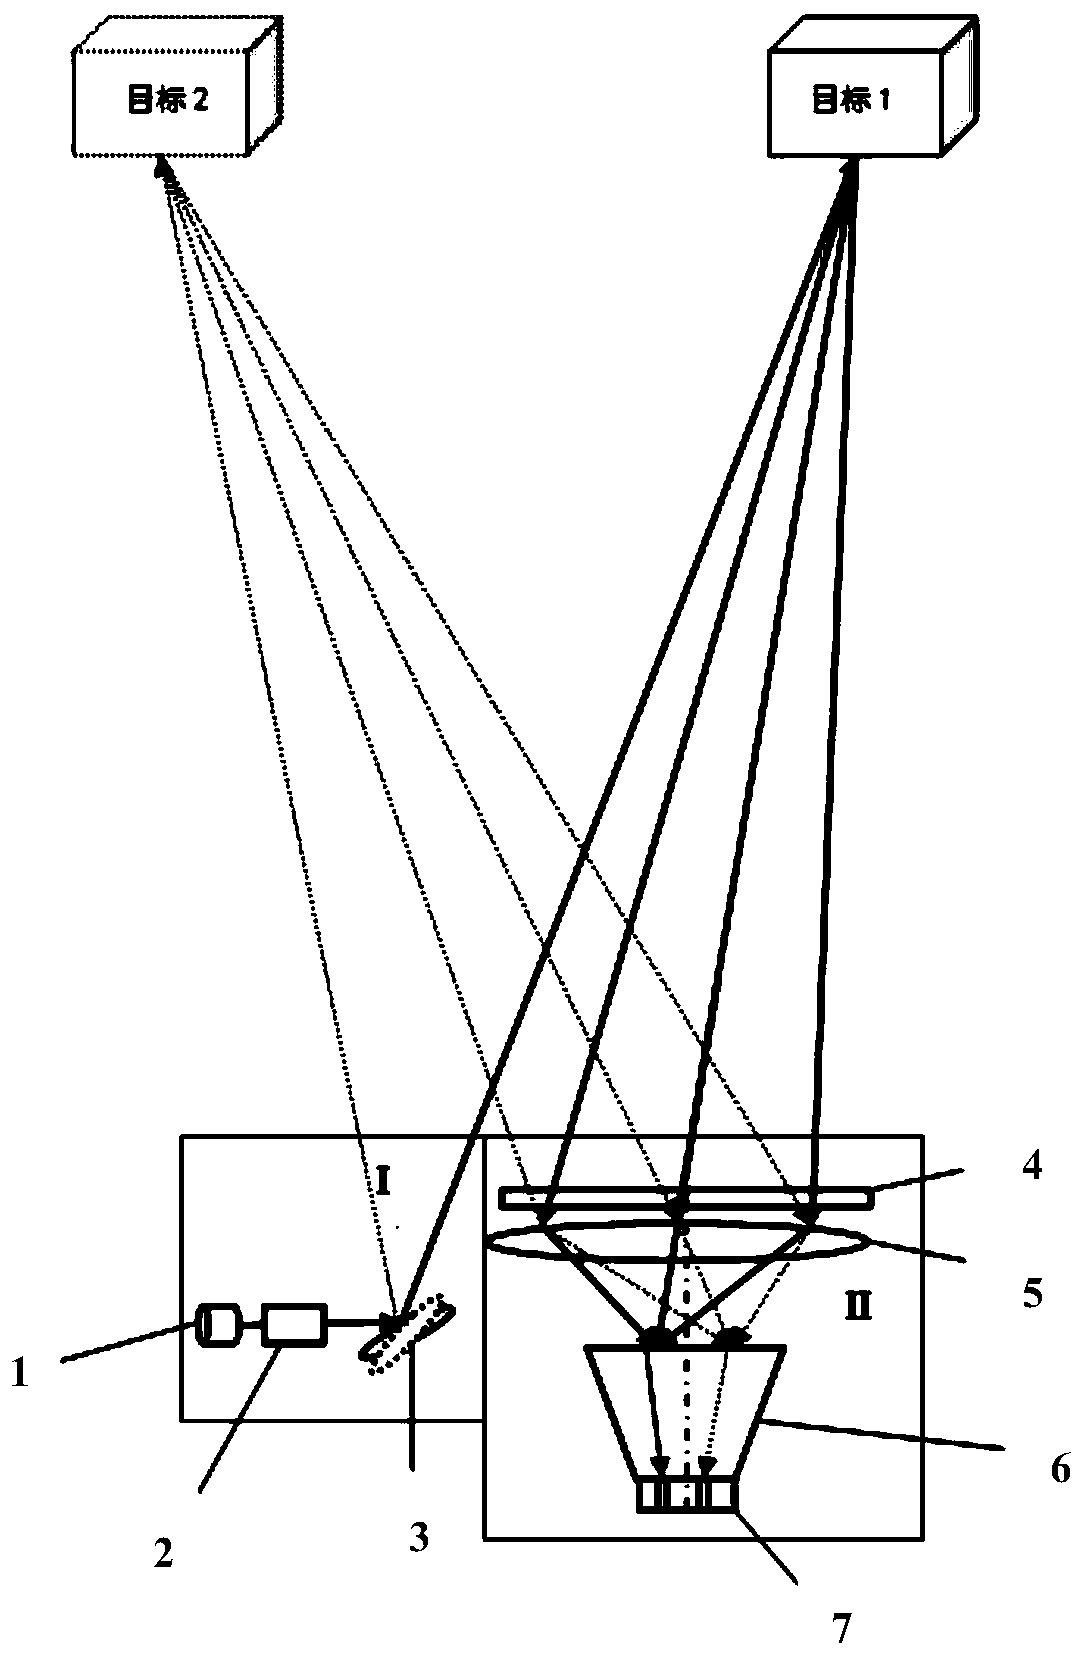 Two-dimensional MEMS scanning galvanometer laser radar system